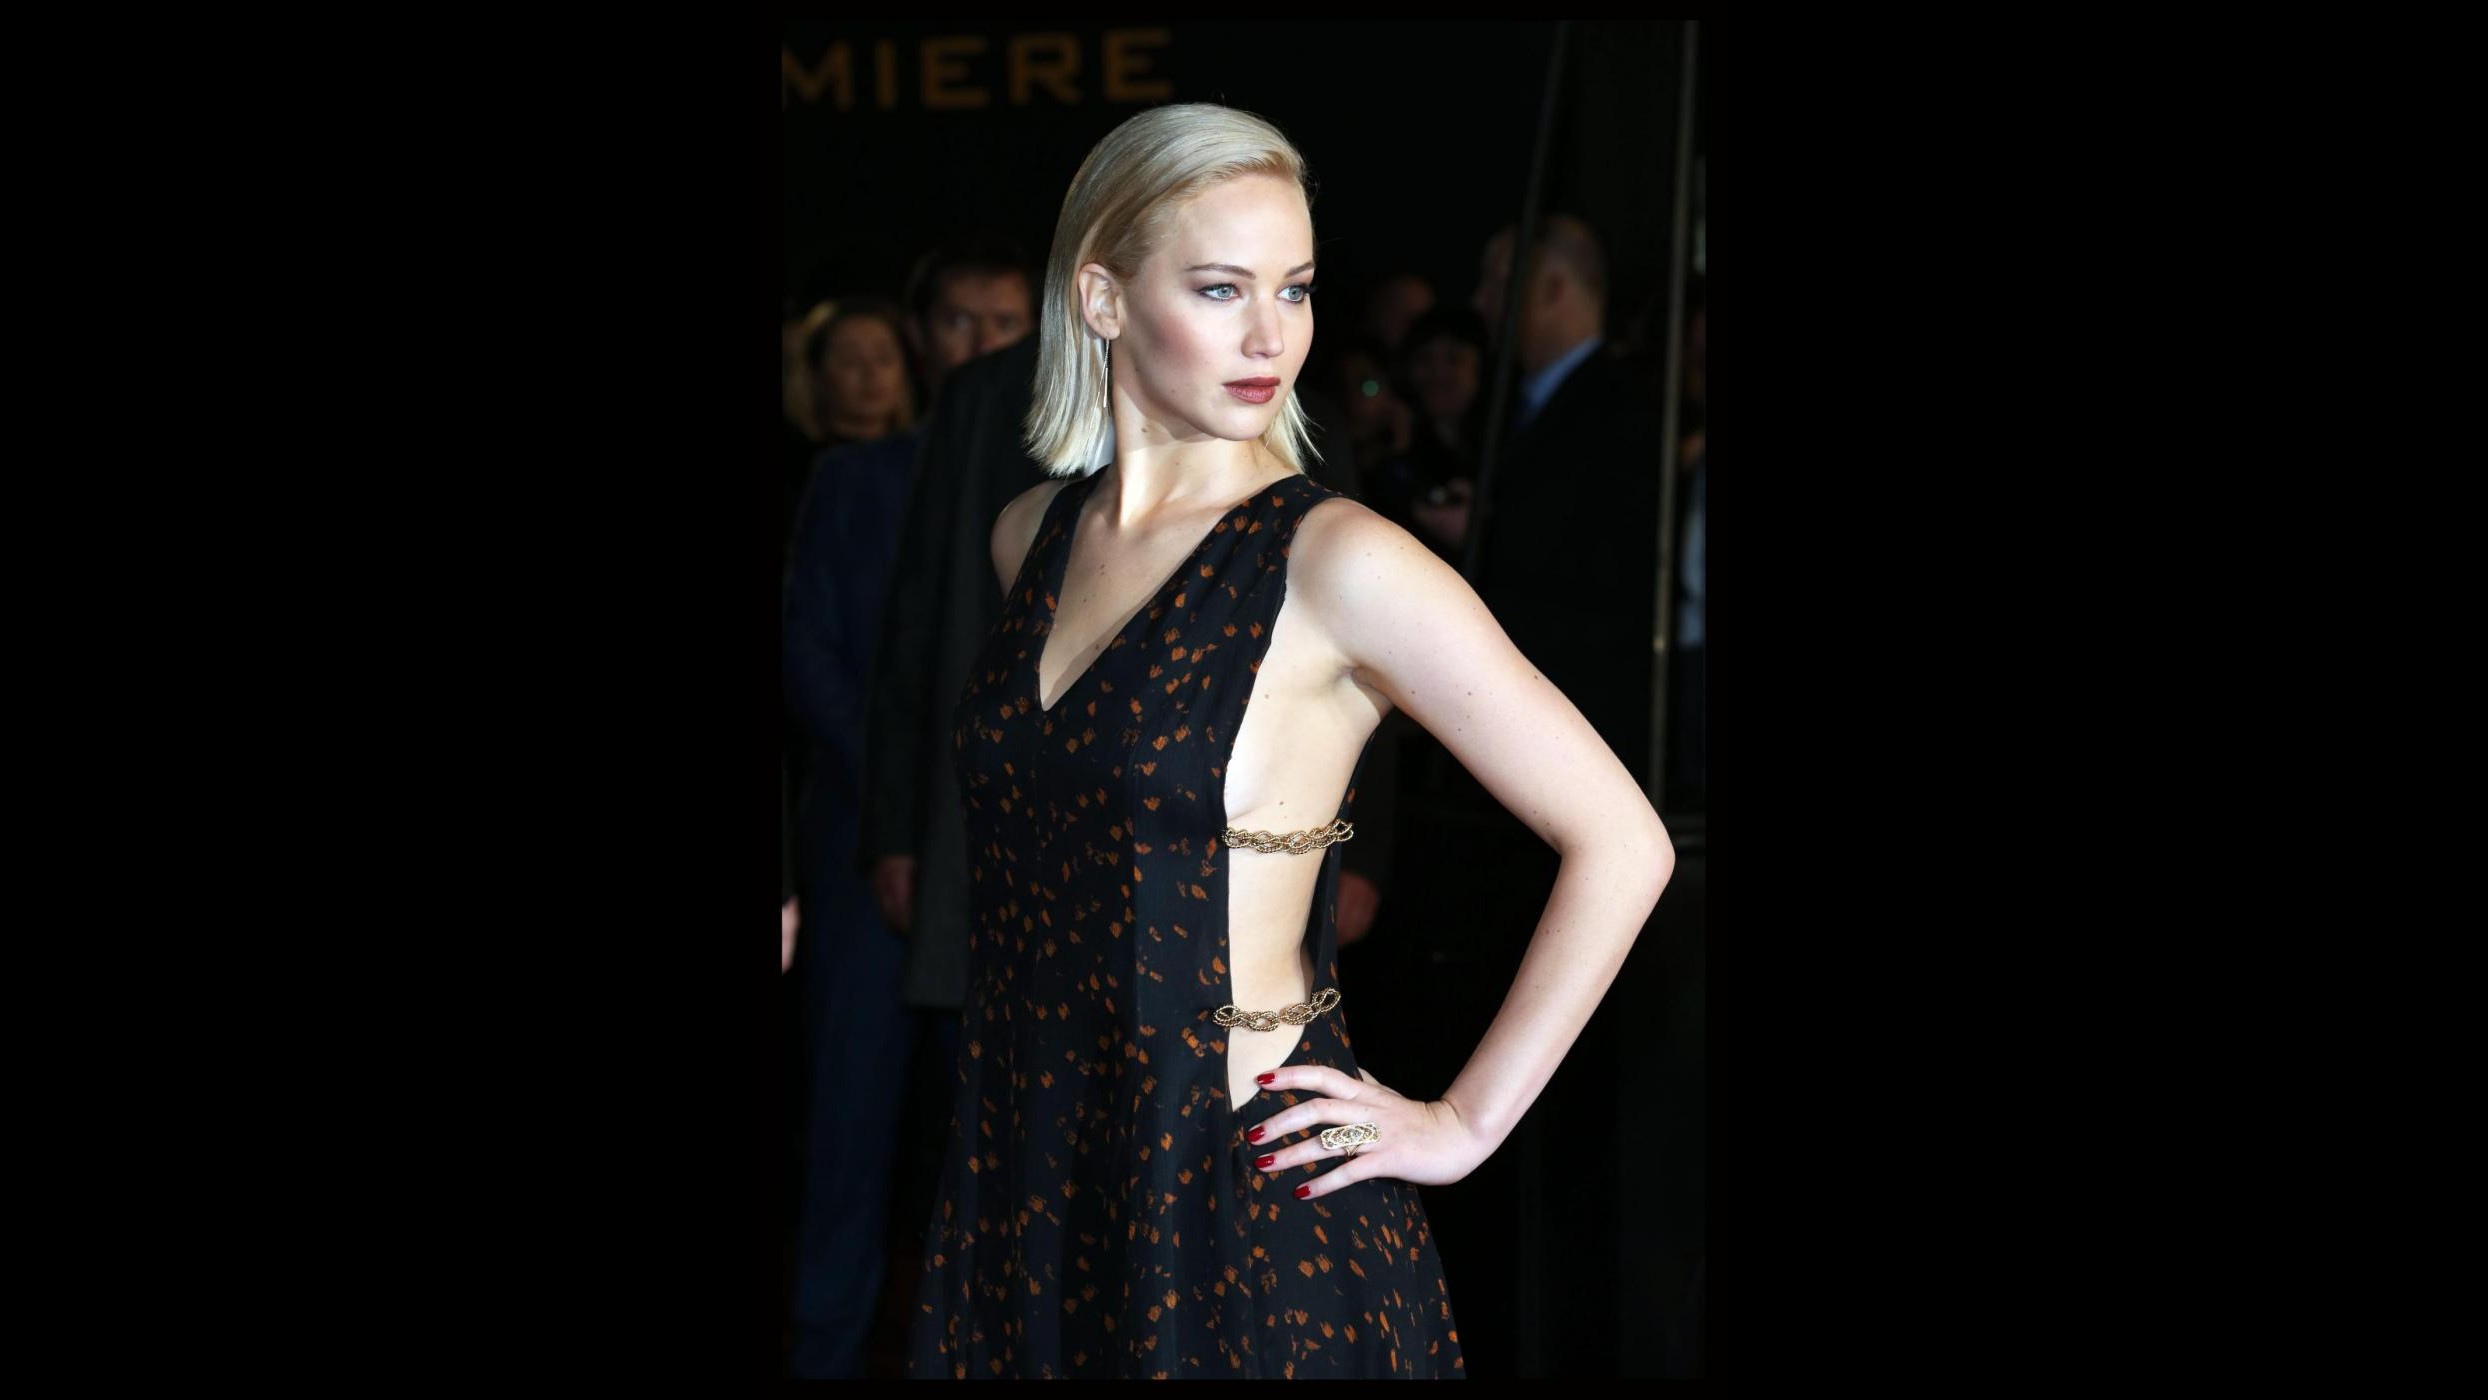 Cast ‘Hunger Games’ sul red carpet a Londra, Jennifer Lawrence mozzafiato